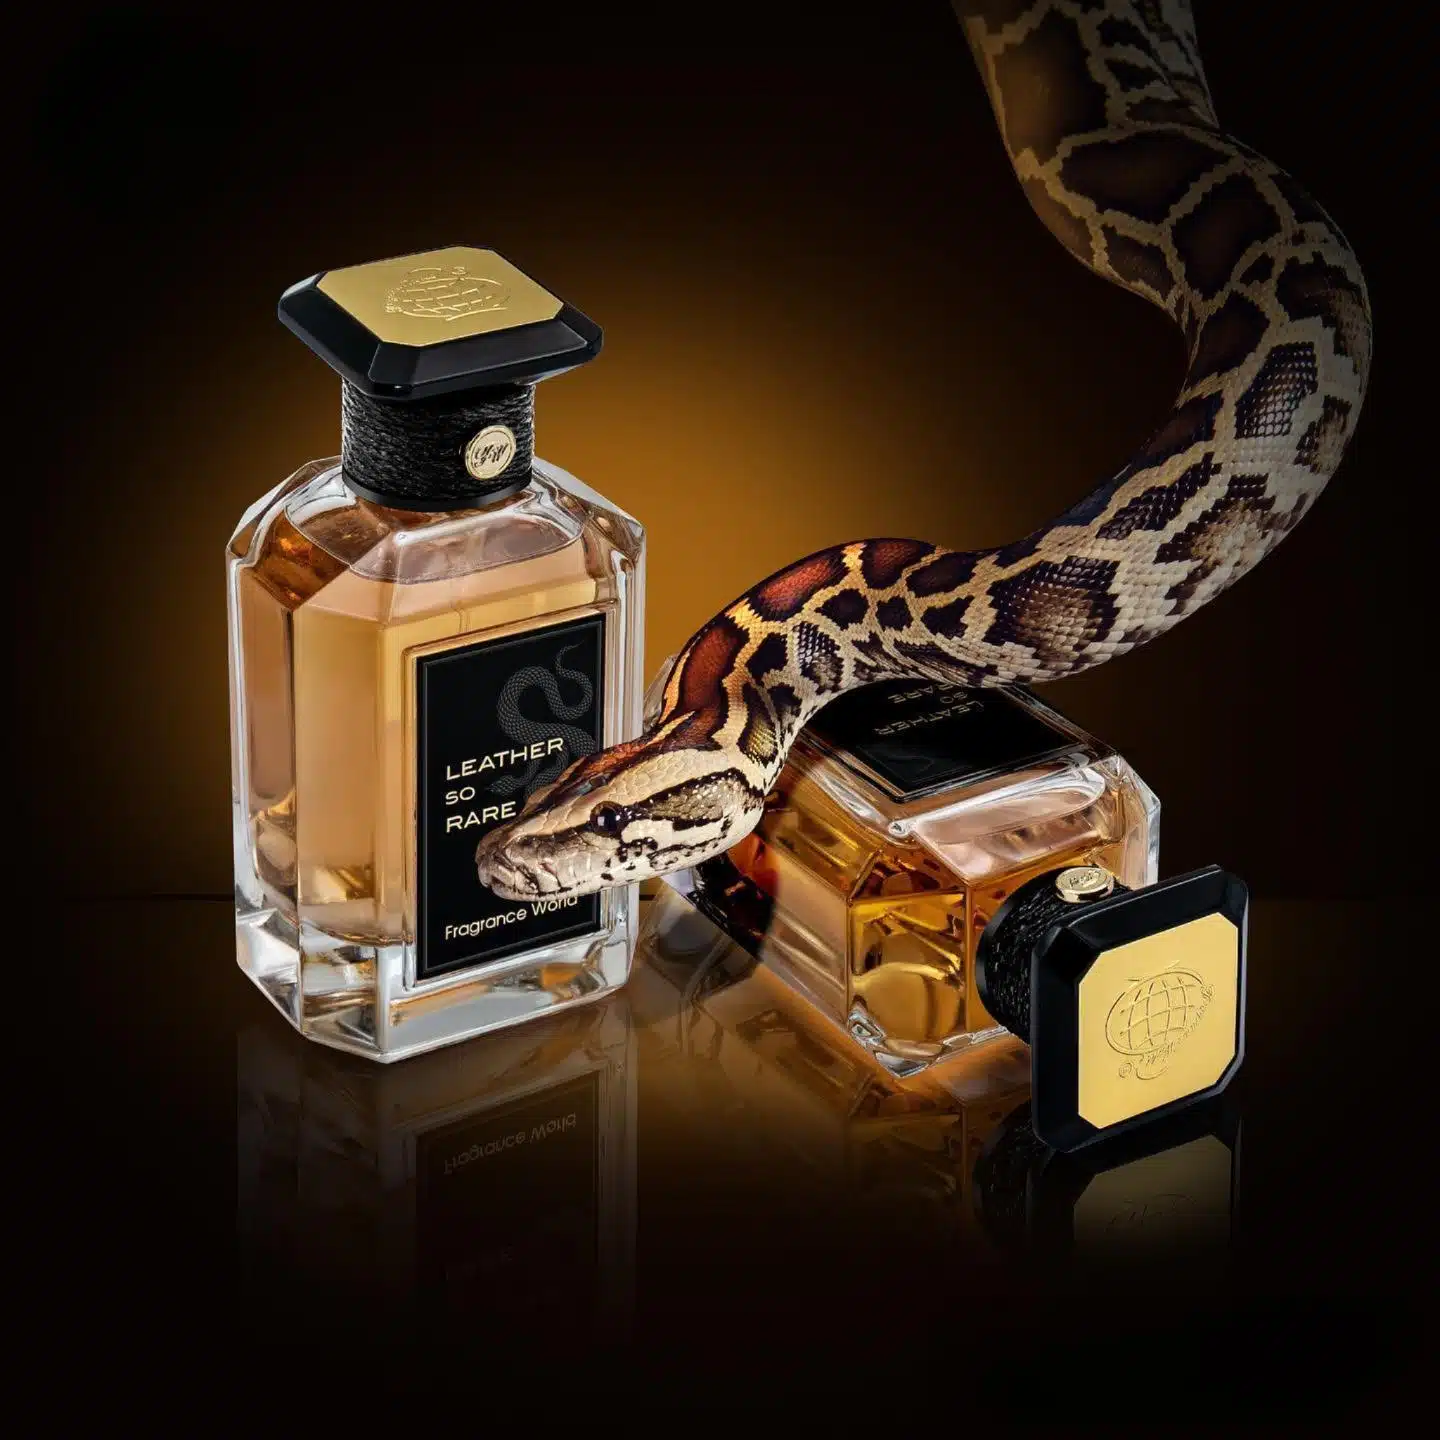 Leather So Rare Perfume / Eau De Parfum By Fragrance World